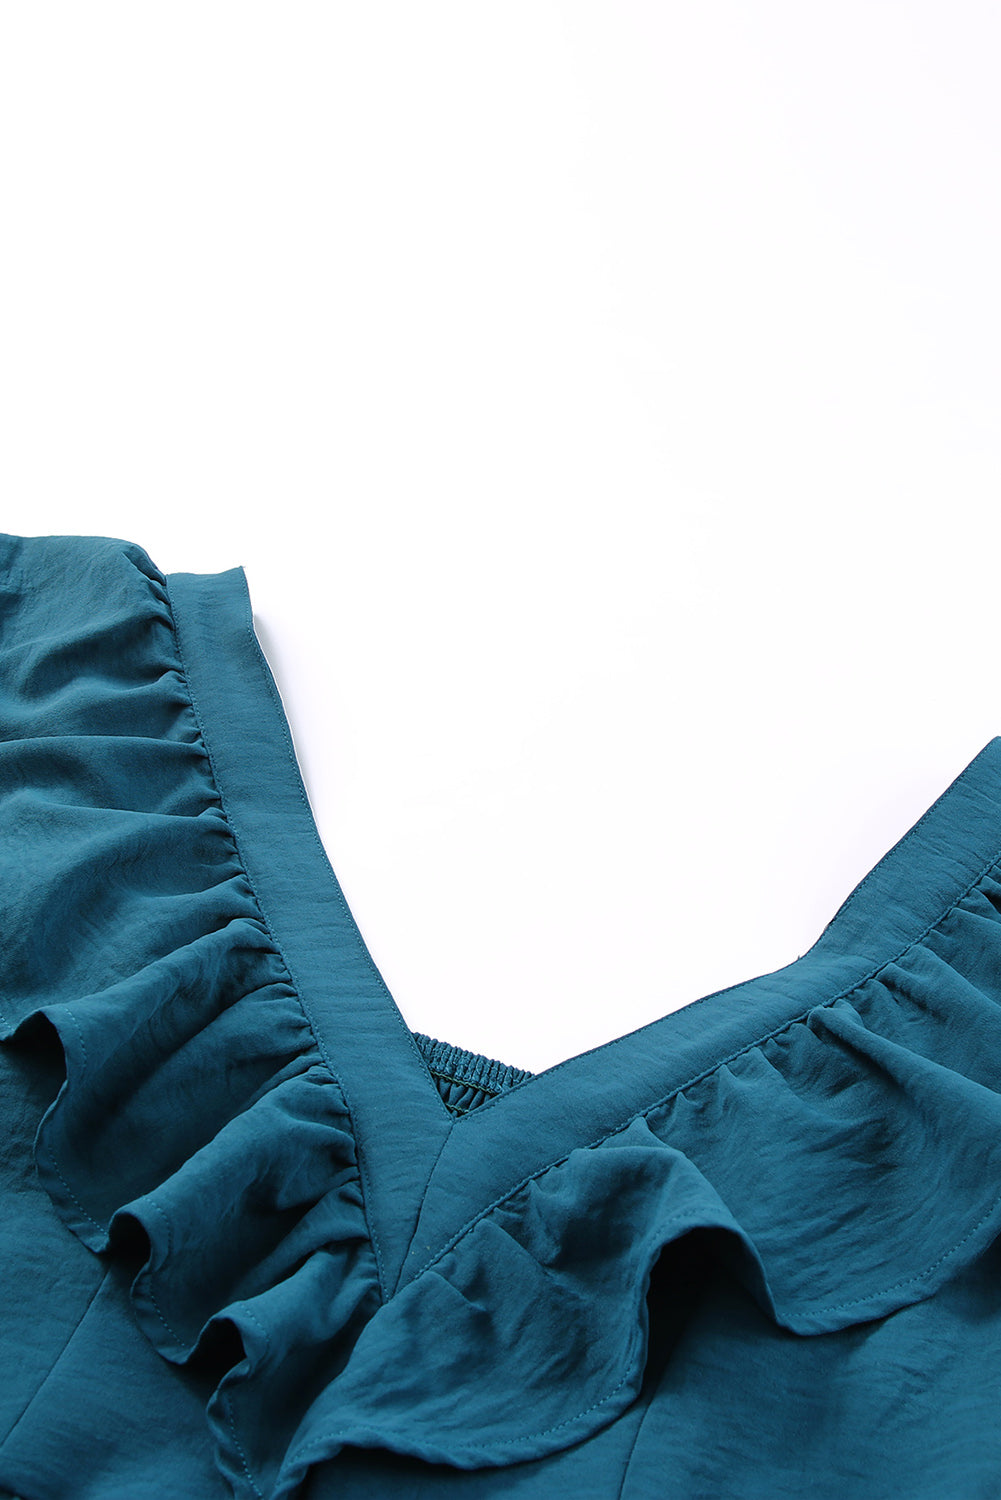 Blue Ruffle Trim V Neck Casual Smocked Back Mini Dress